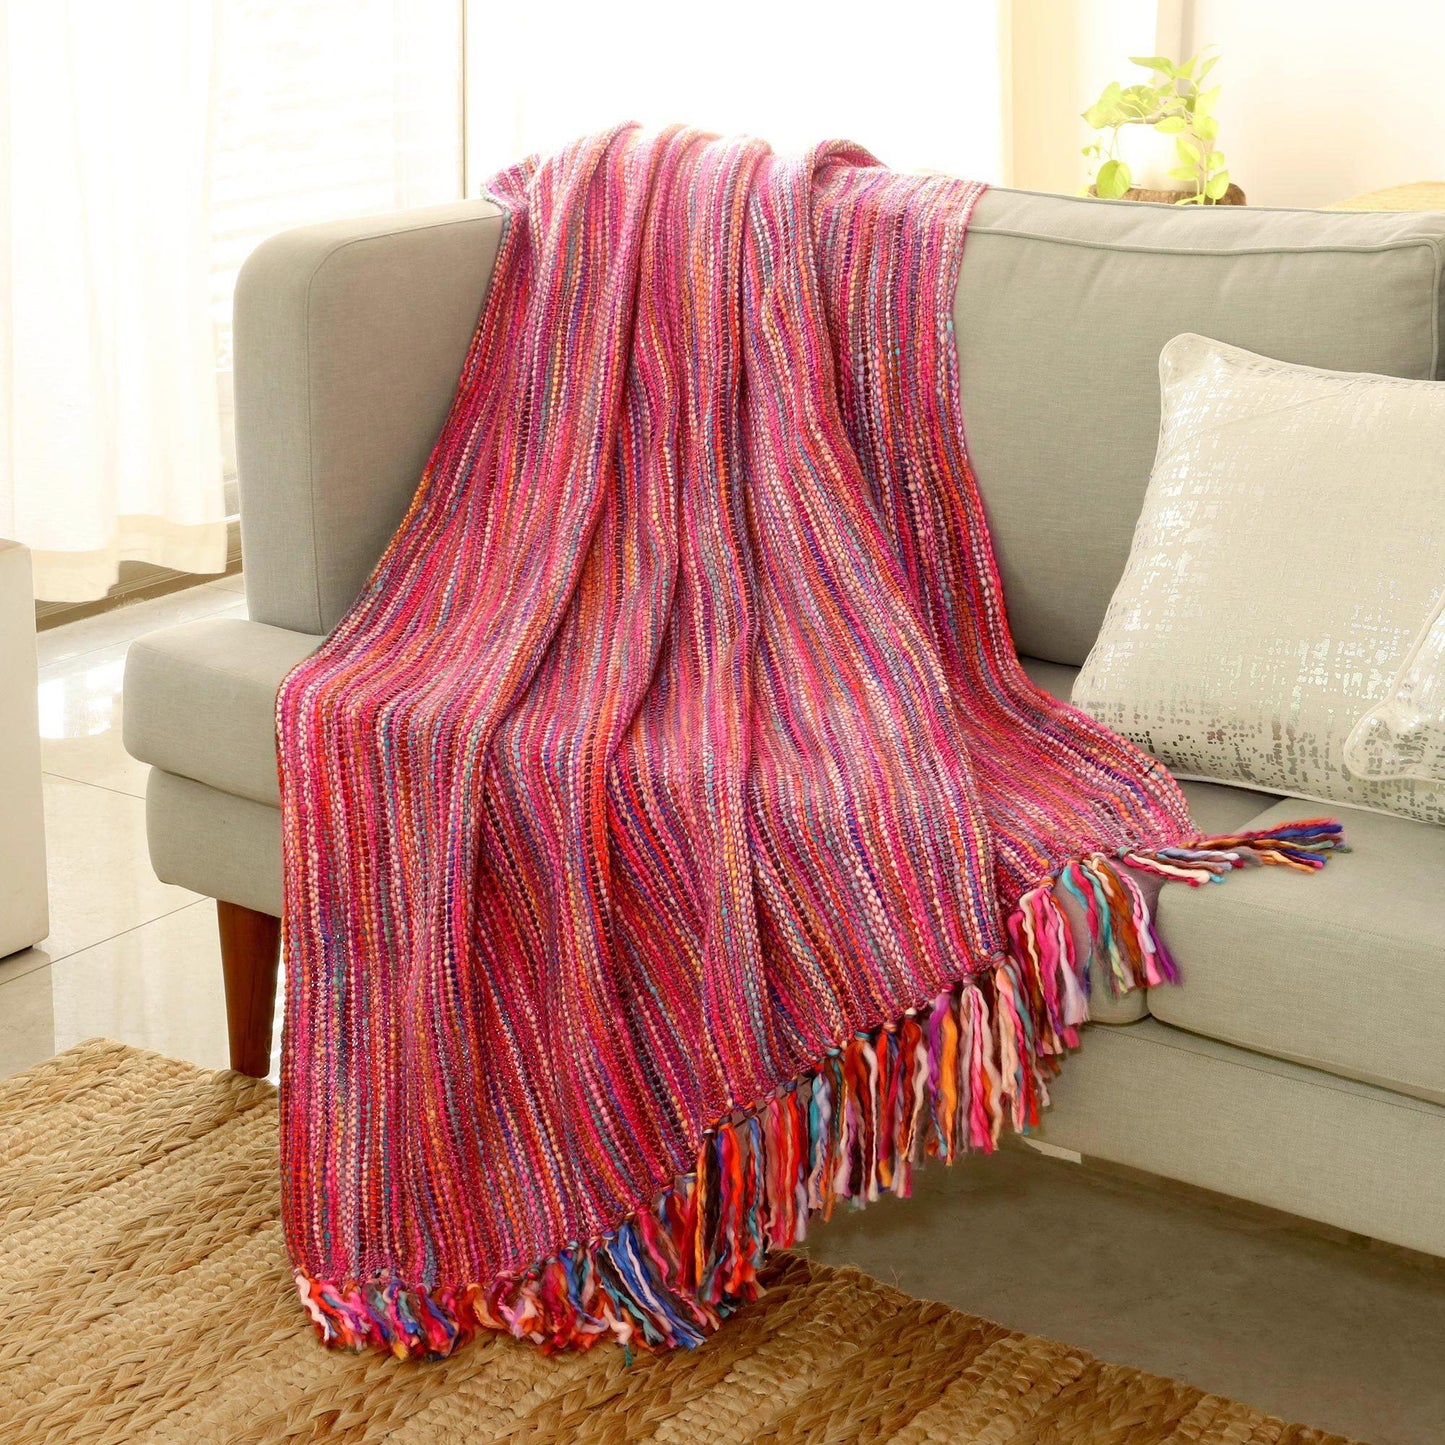 Colorful Rainbow Woven Throw Blanket